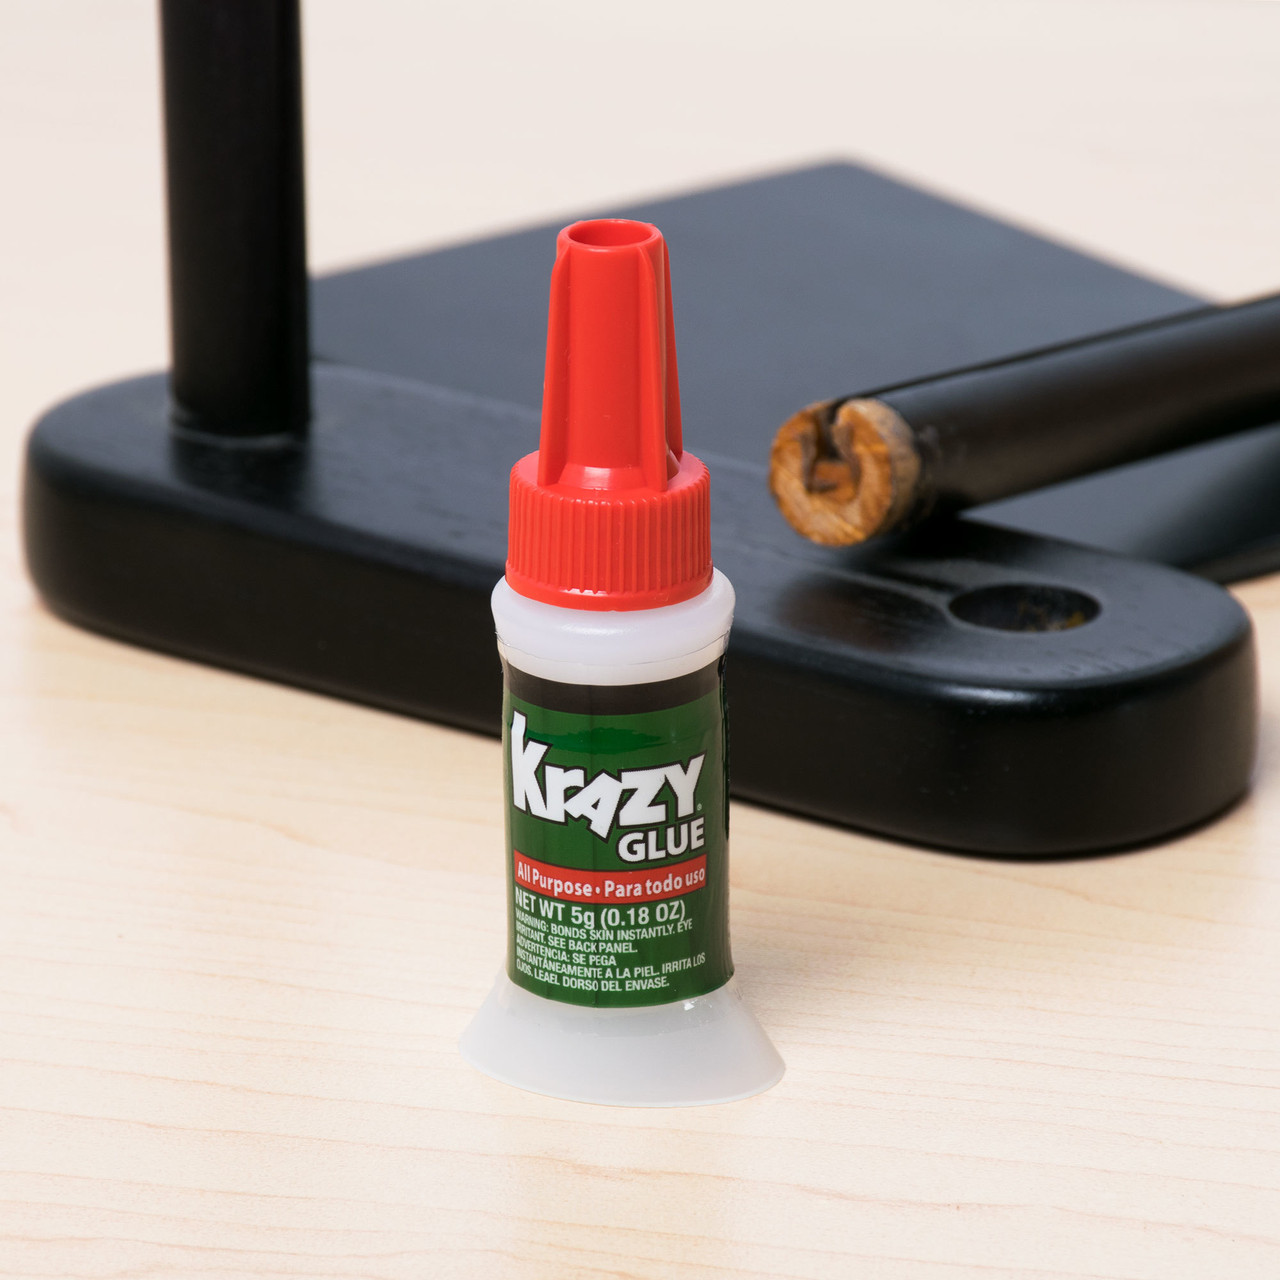 Krazy Glue All Purpose Brush-On Glue - 0.18 oz